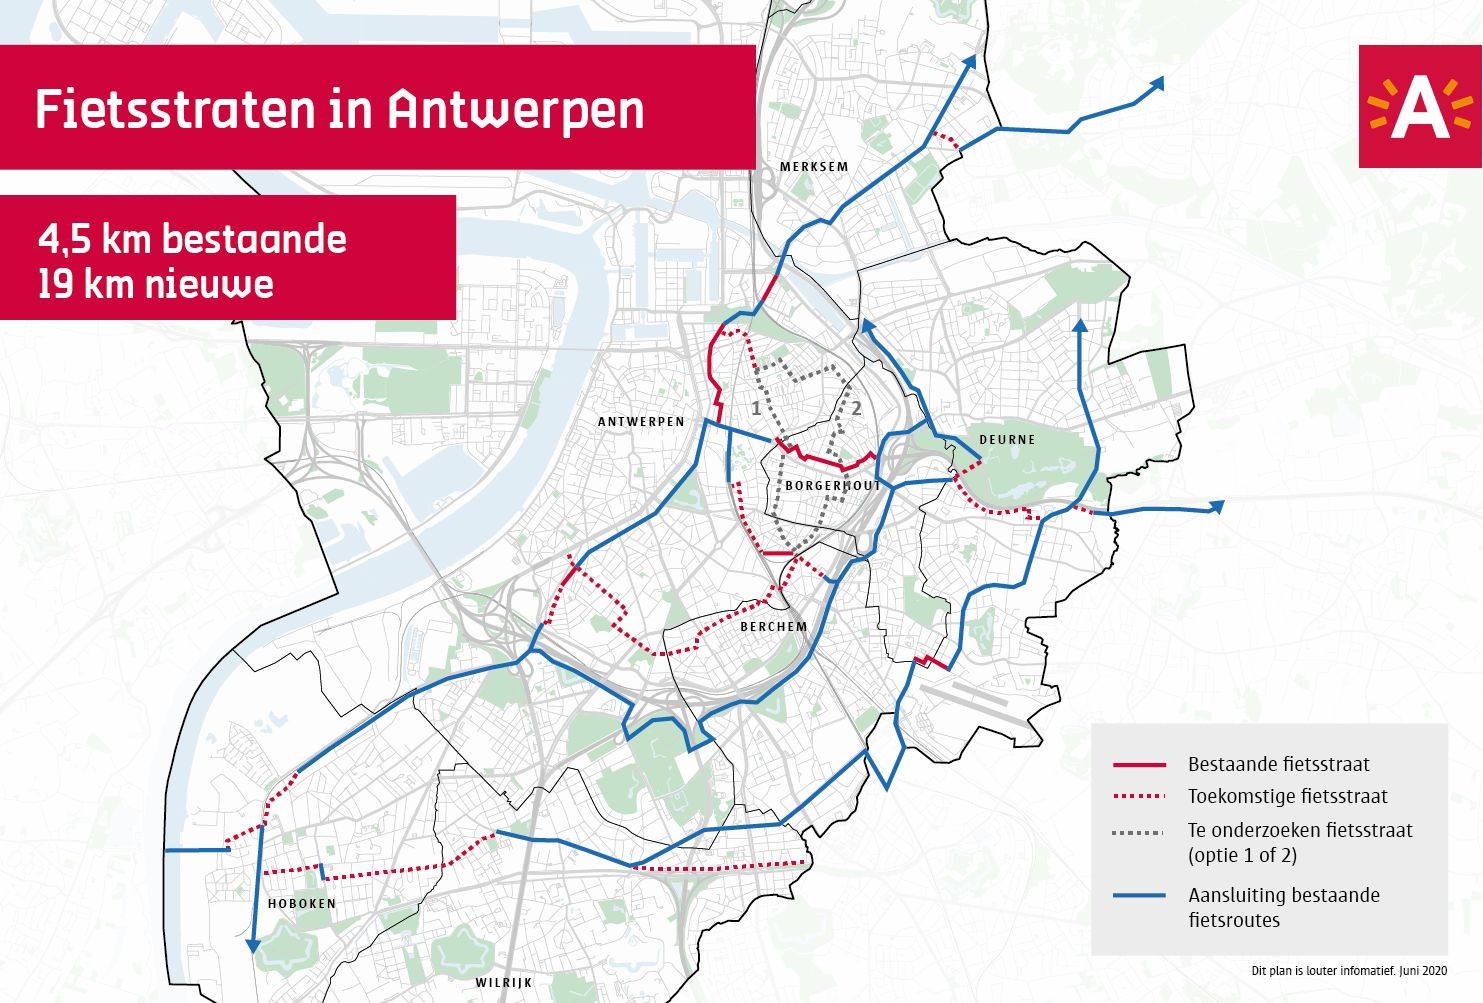 Heleboel nieuwe fietsstraten op komst in Antwerpen